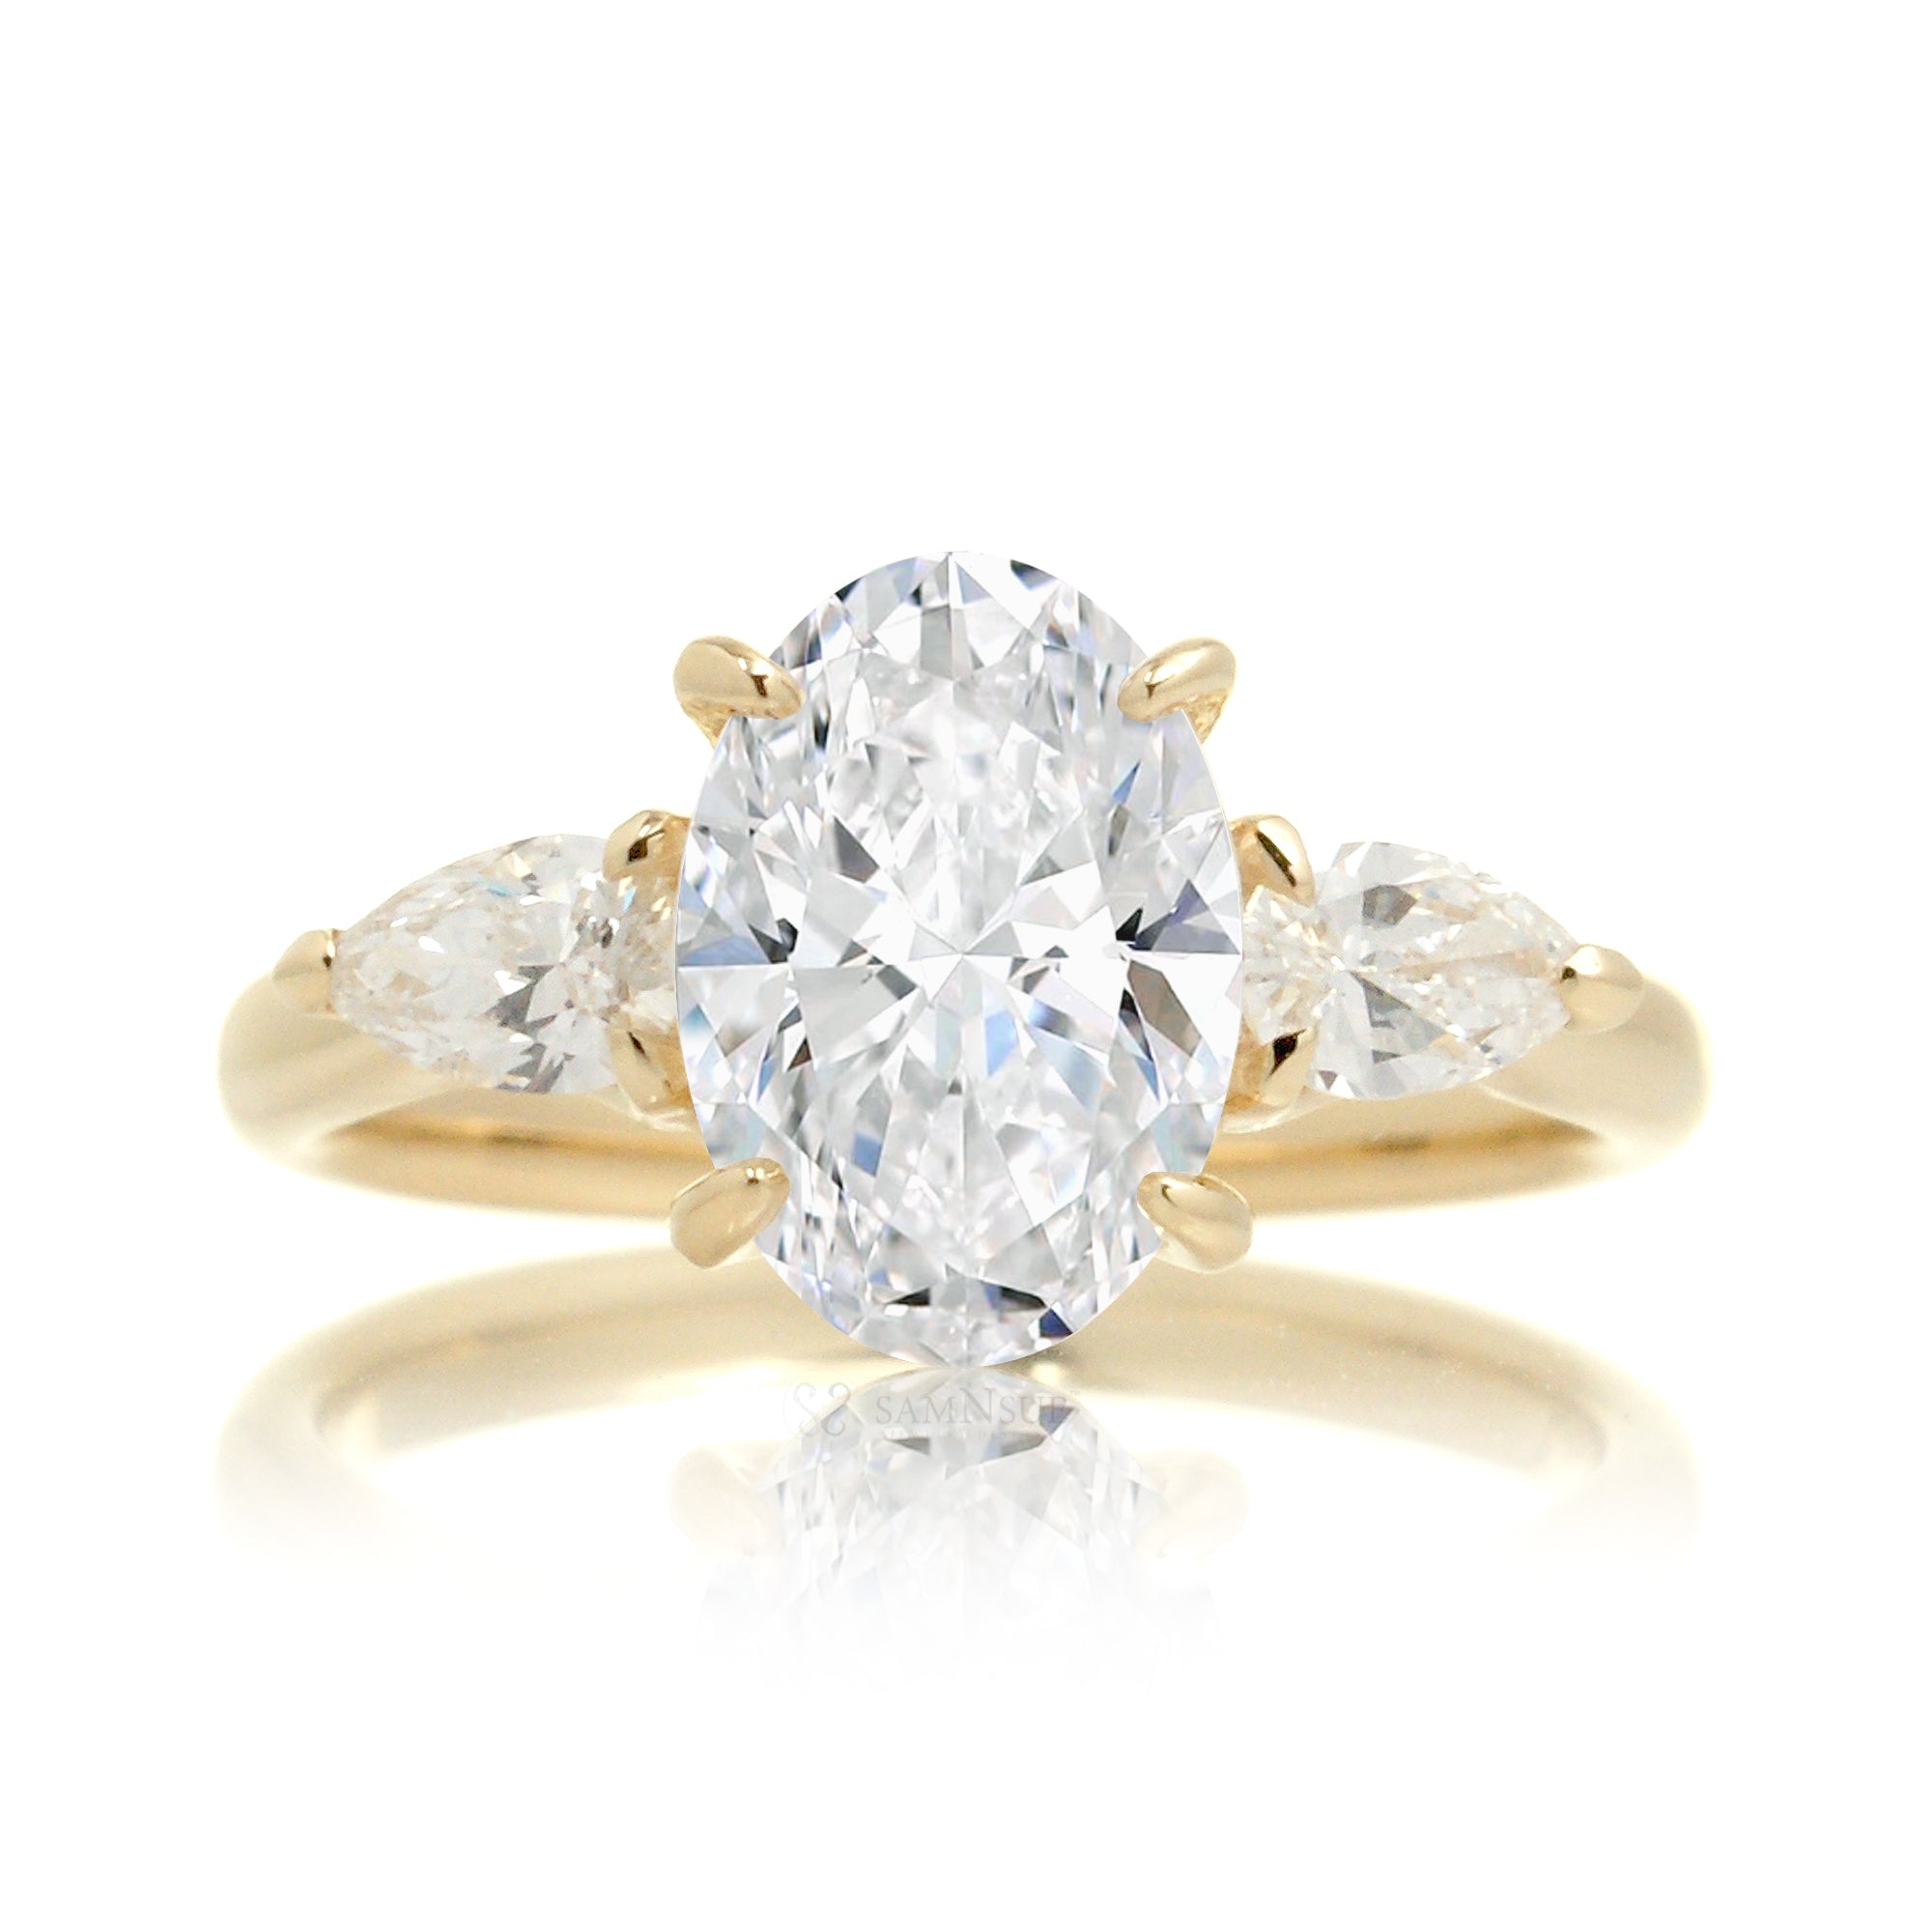 Classic three-stone oval cut diamond engagement ring yellow gold